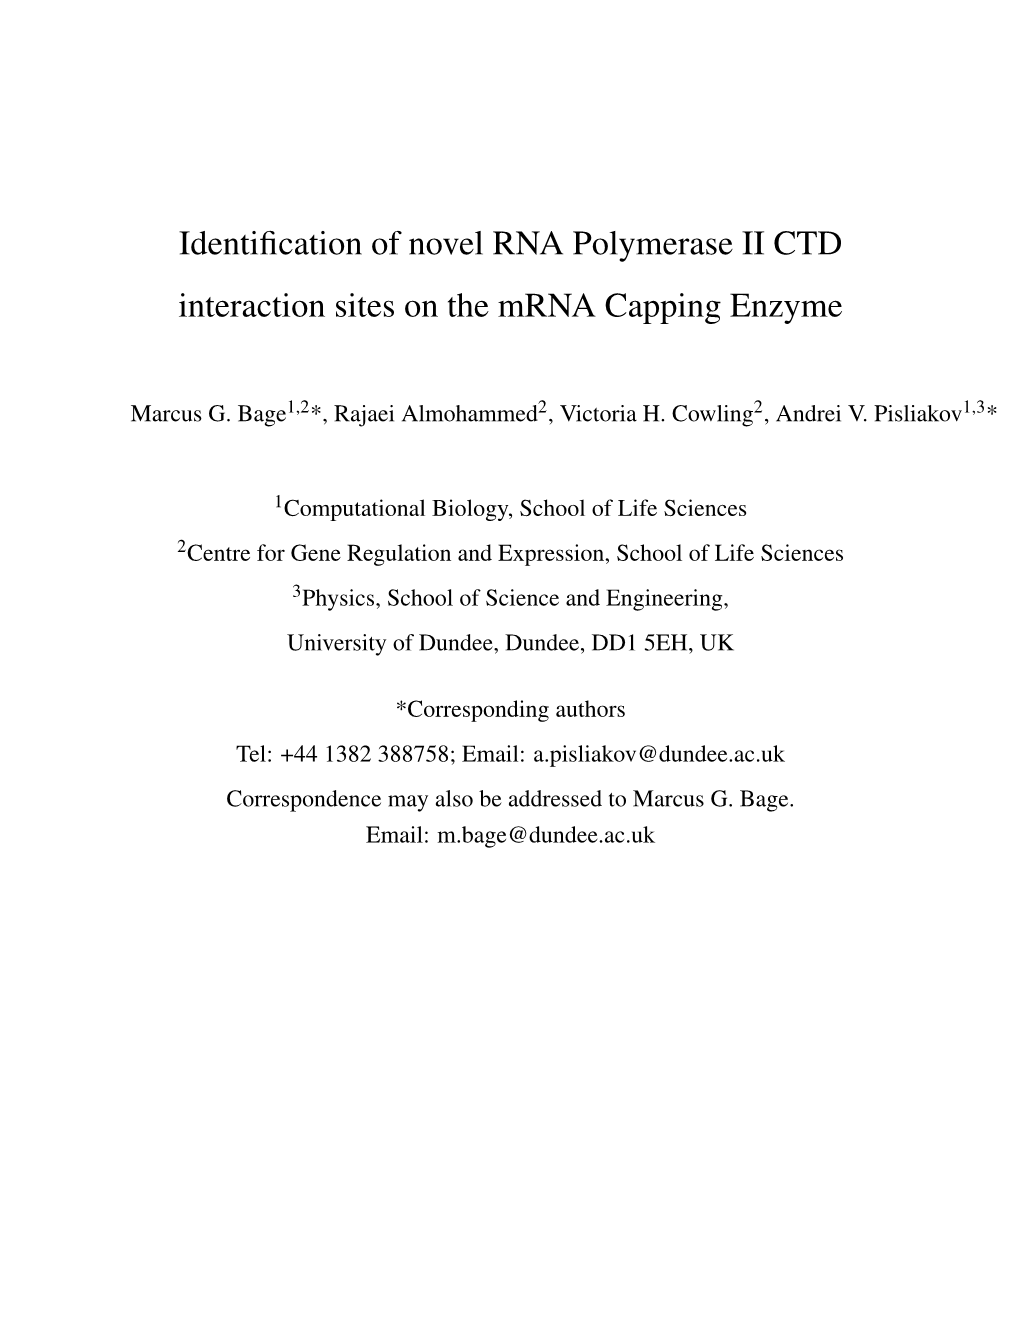 Identification of Novel RNA Polymerase II CTD Interaction Sites